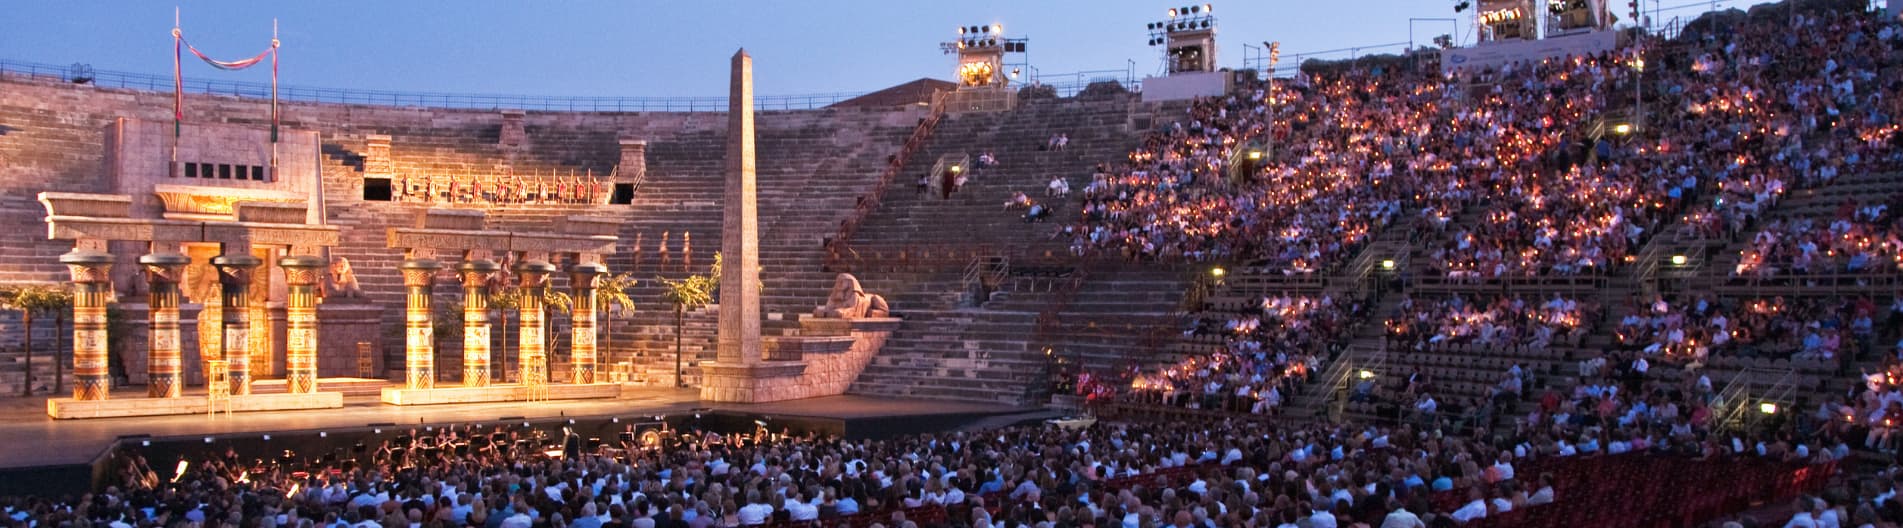 Opernfestival Arena di Verona 2022